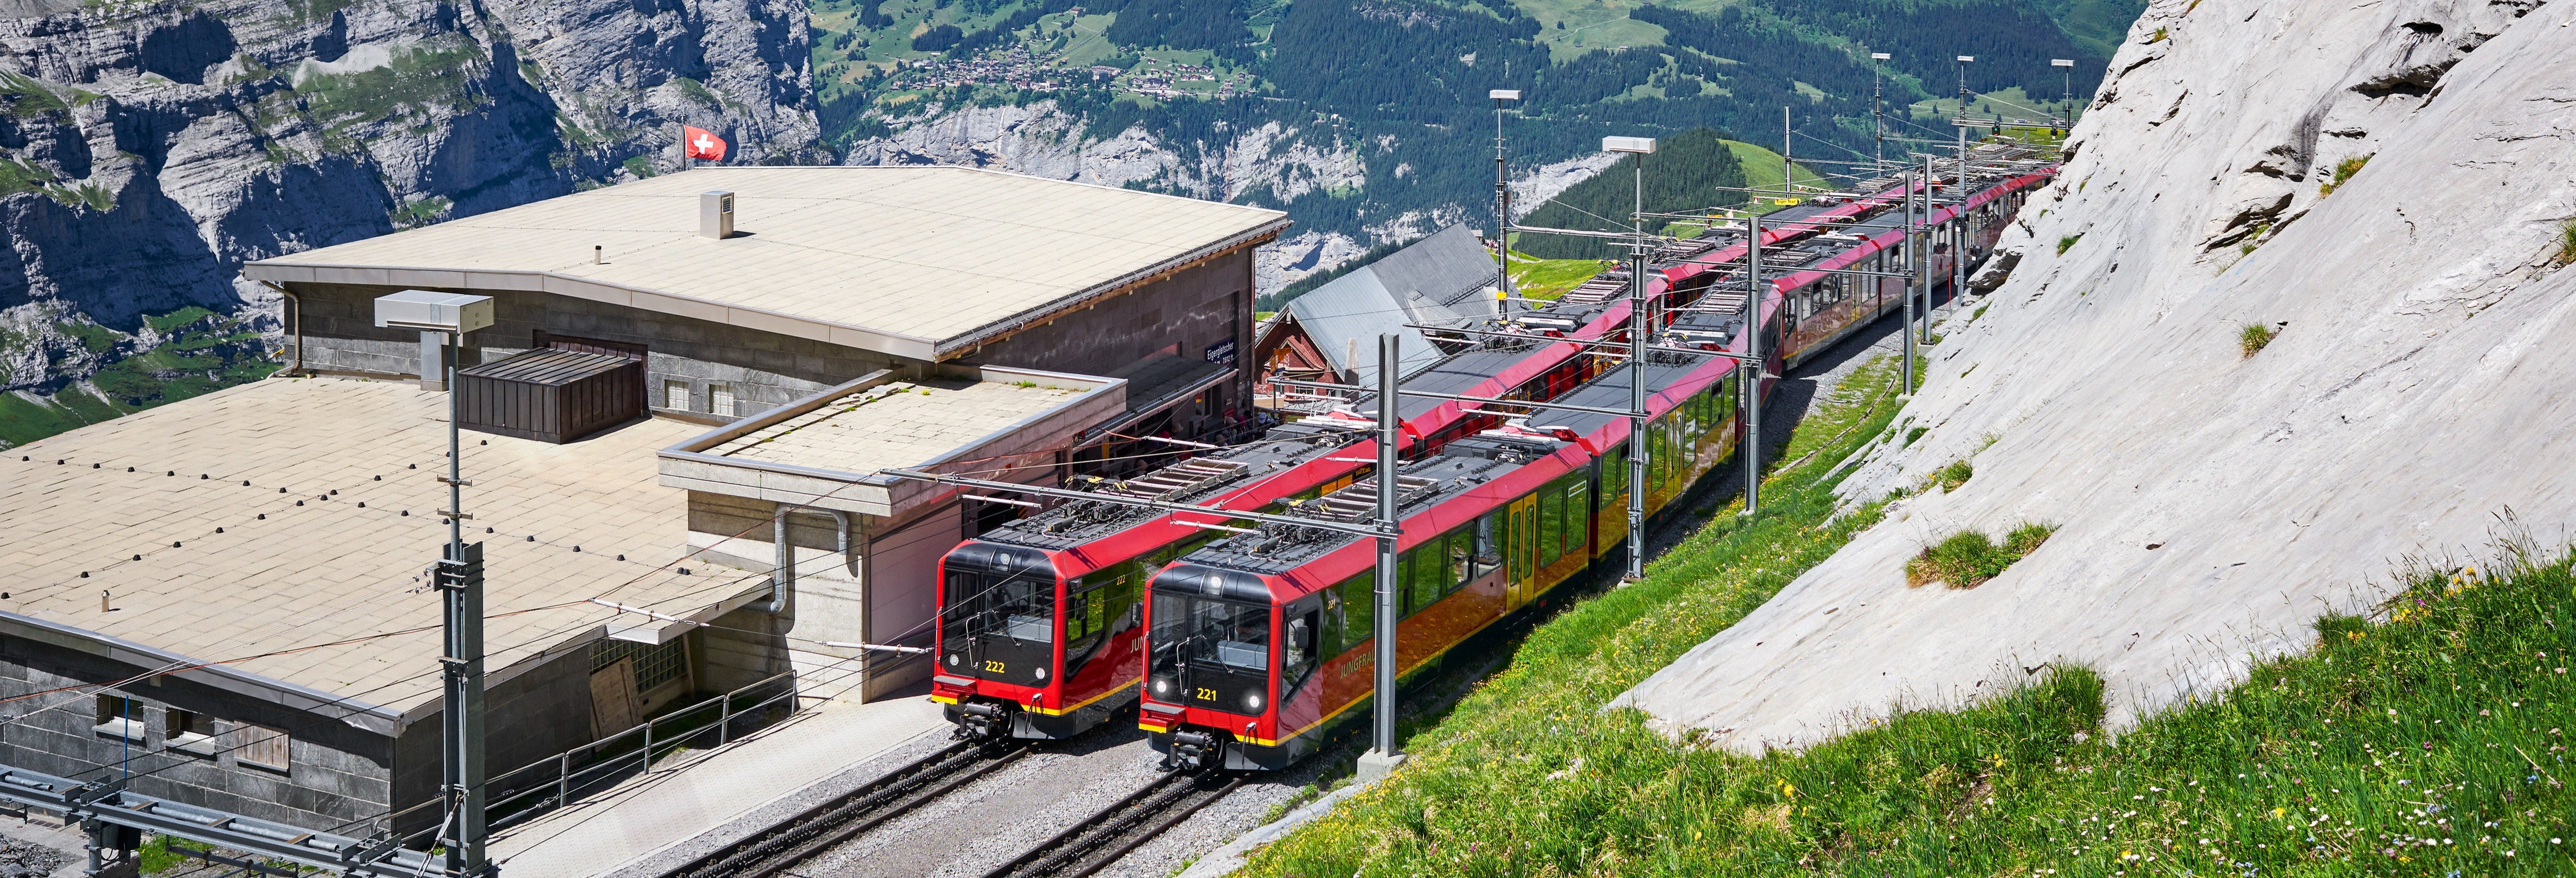 Jungfrau Travel Pass - Unlimited Travel